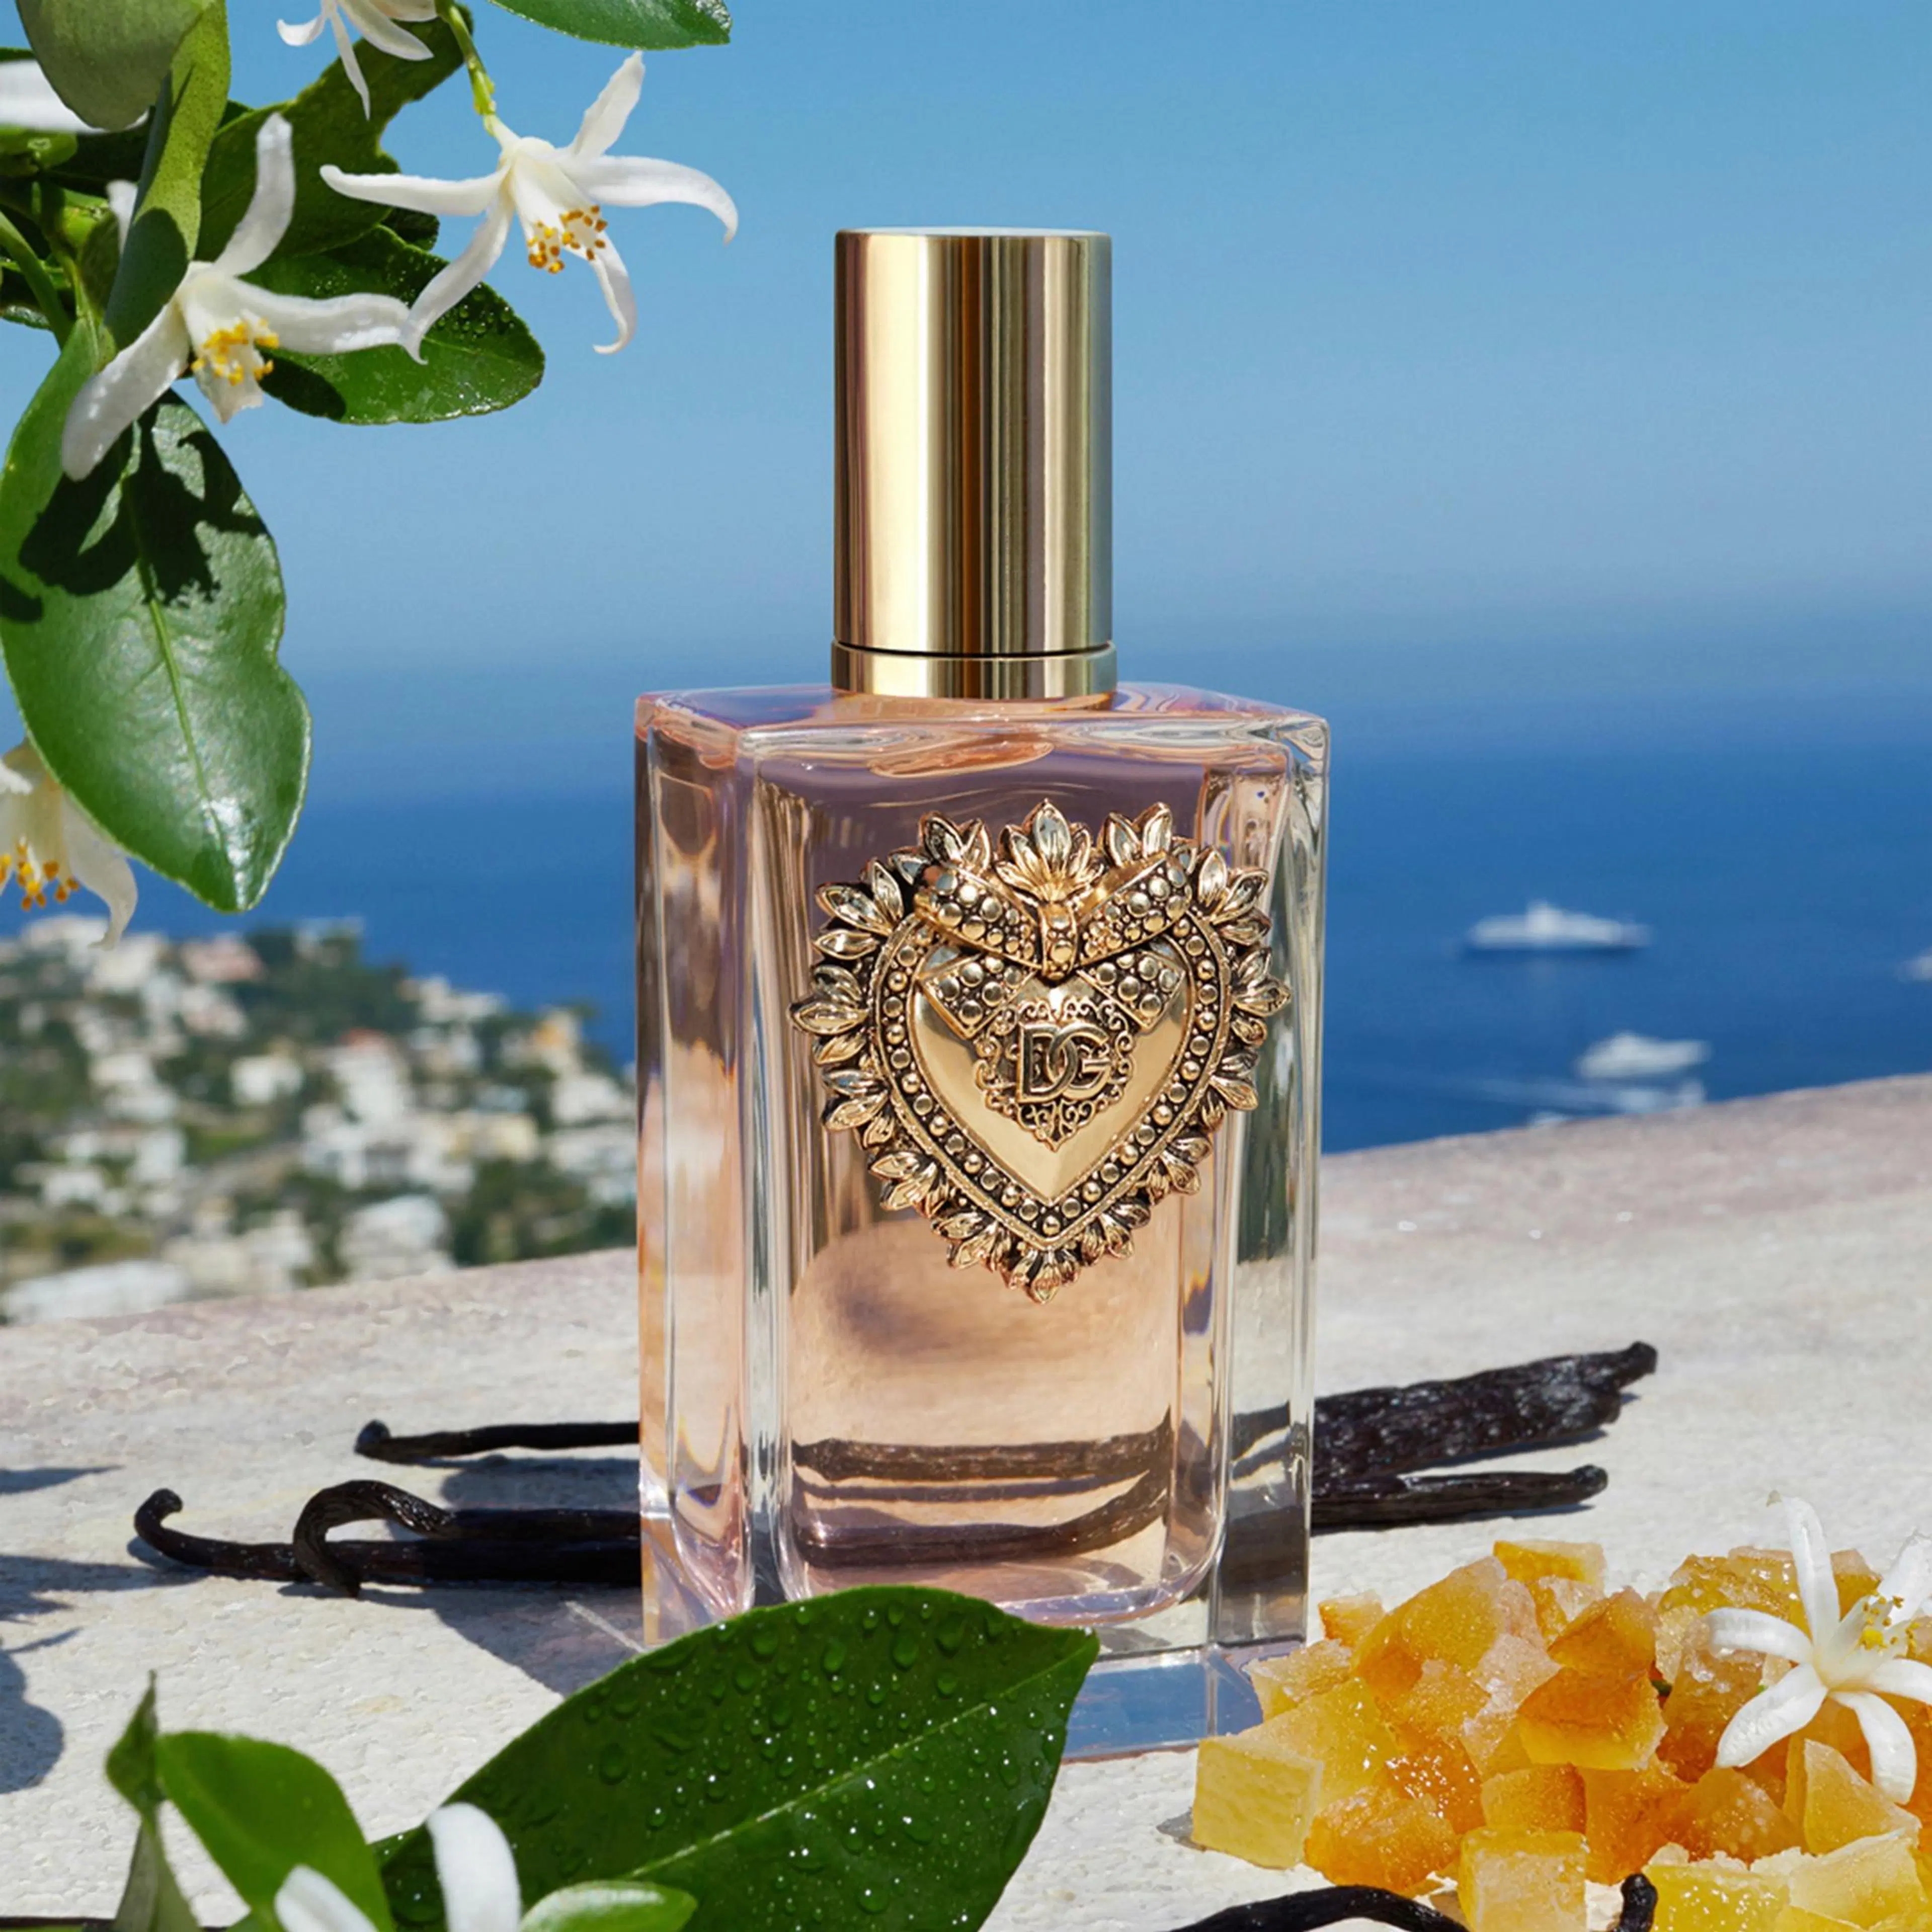 Dolce&Gabbana Devotion EdP tuoksu 30 ml